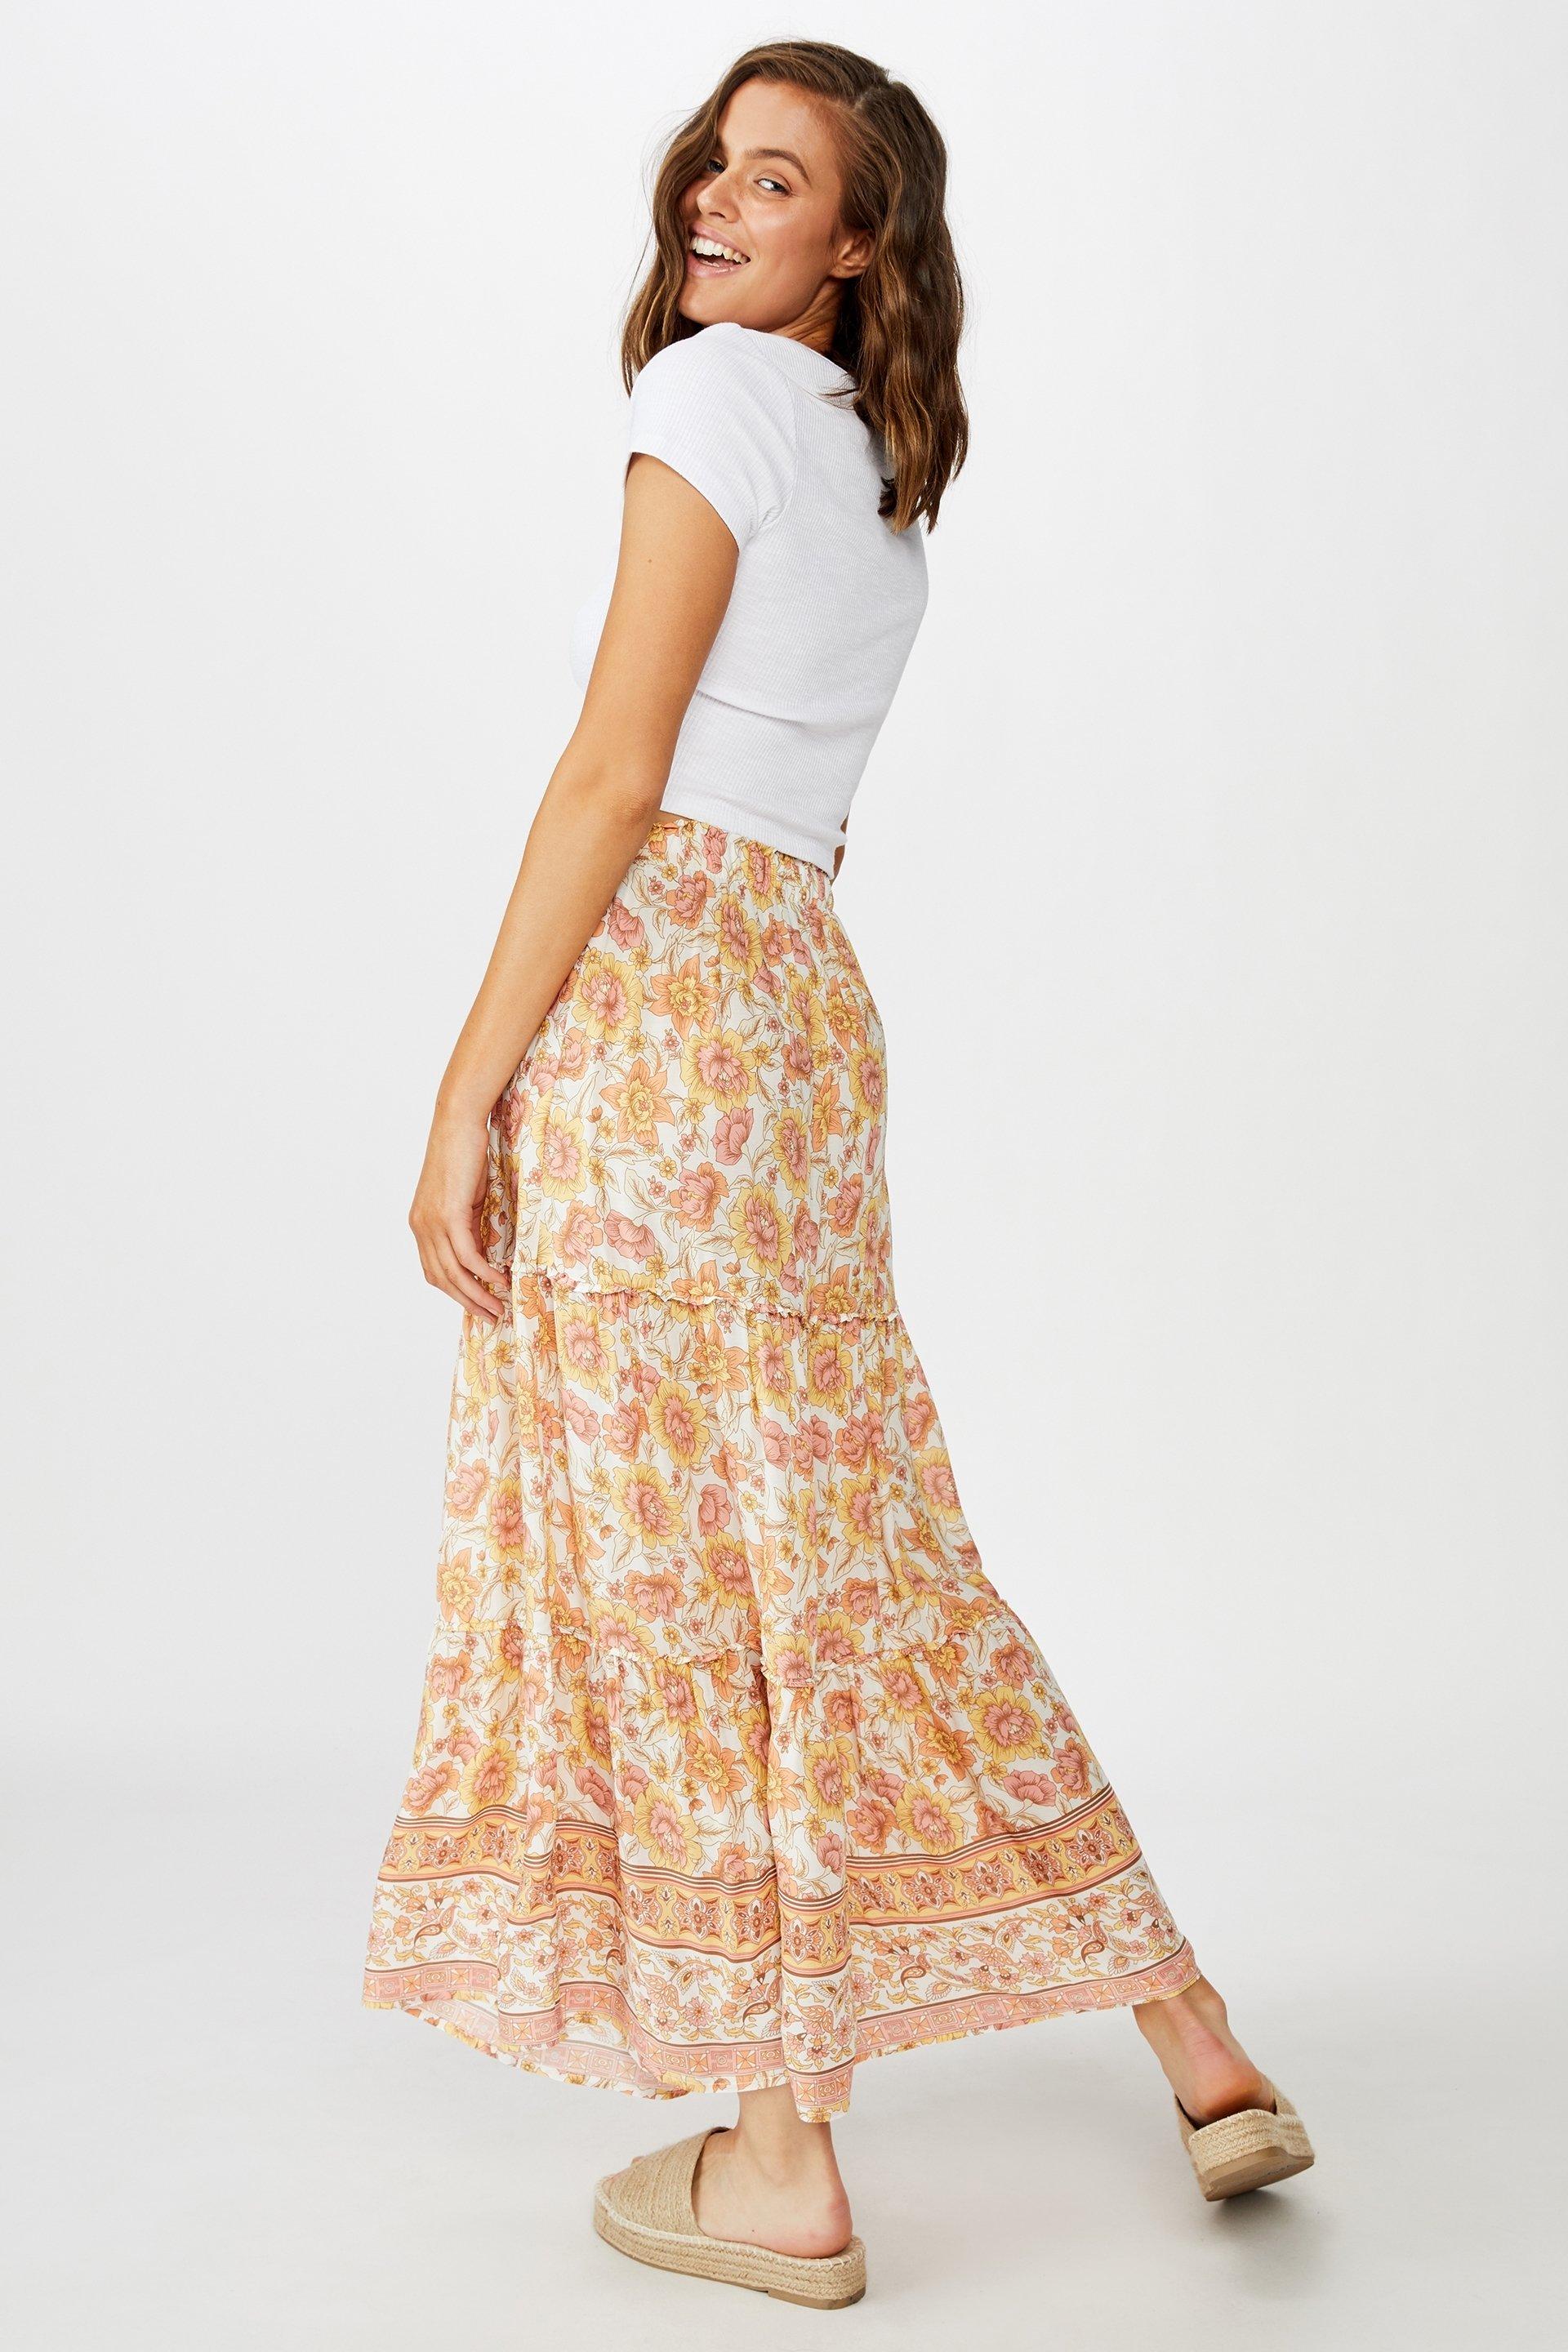 Maya maxi skirt - floral/apricot ice Cotton On Skirts | Superbalist.com